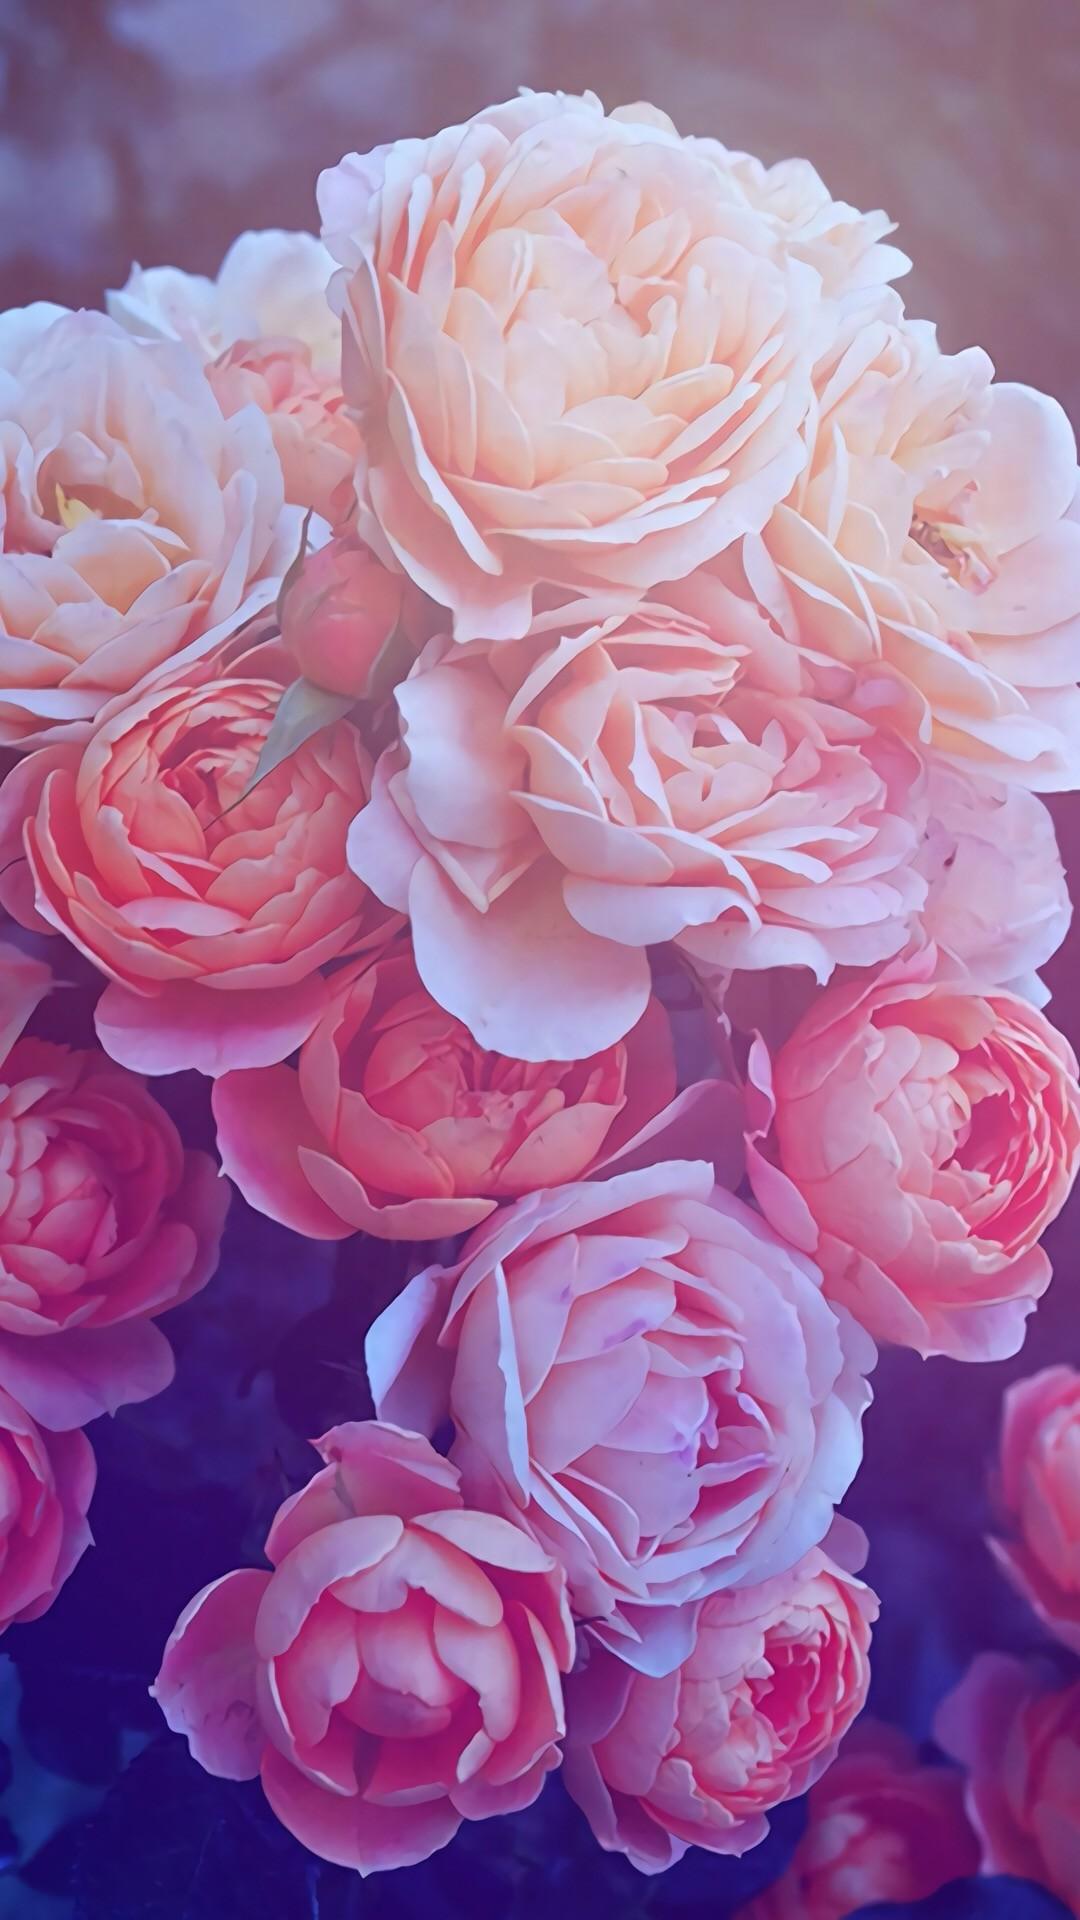 Pink Rose iPhone Wallpapers - Wallpaper Cave.